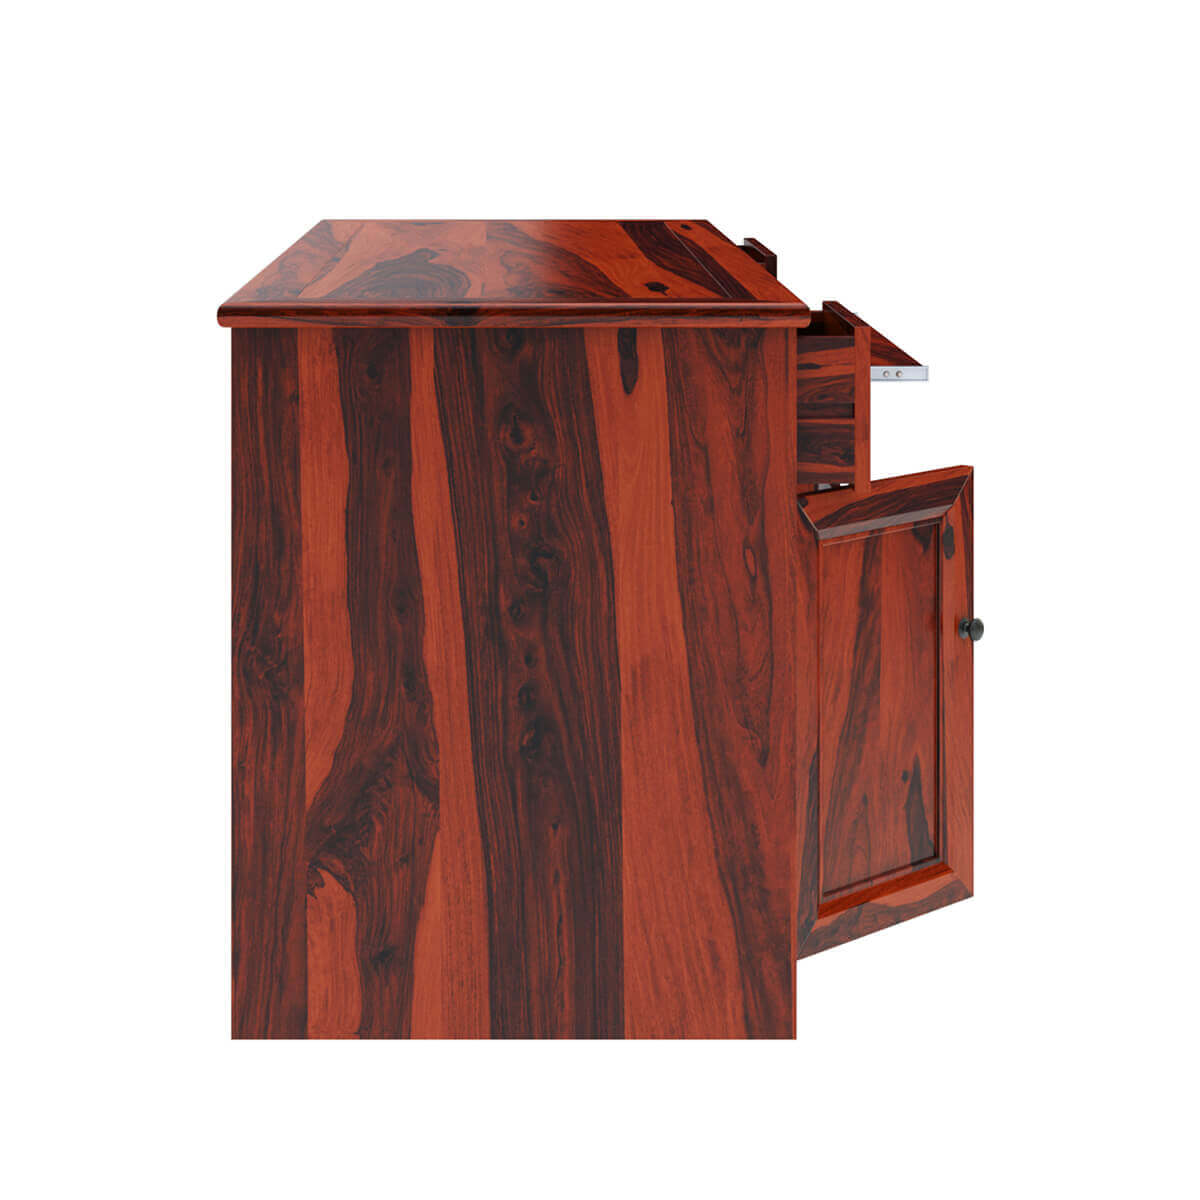 Hondah Solid Wood 64 Inch Modern Industrial Home Office Desk